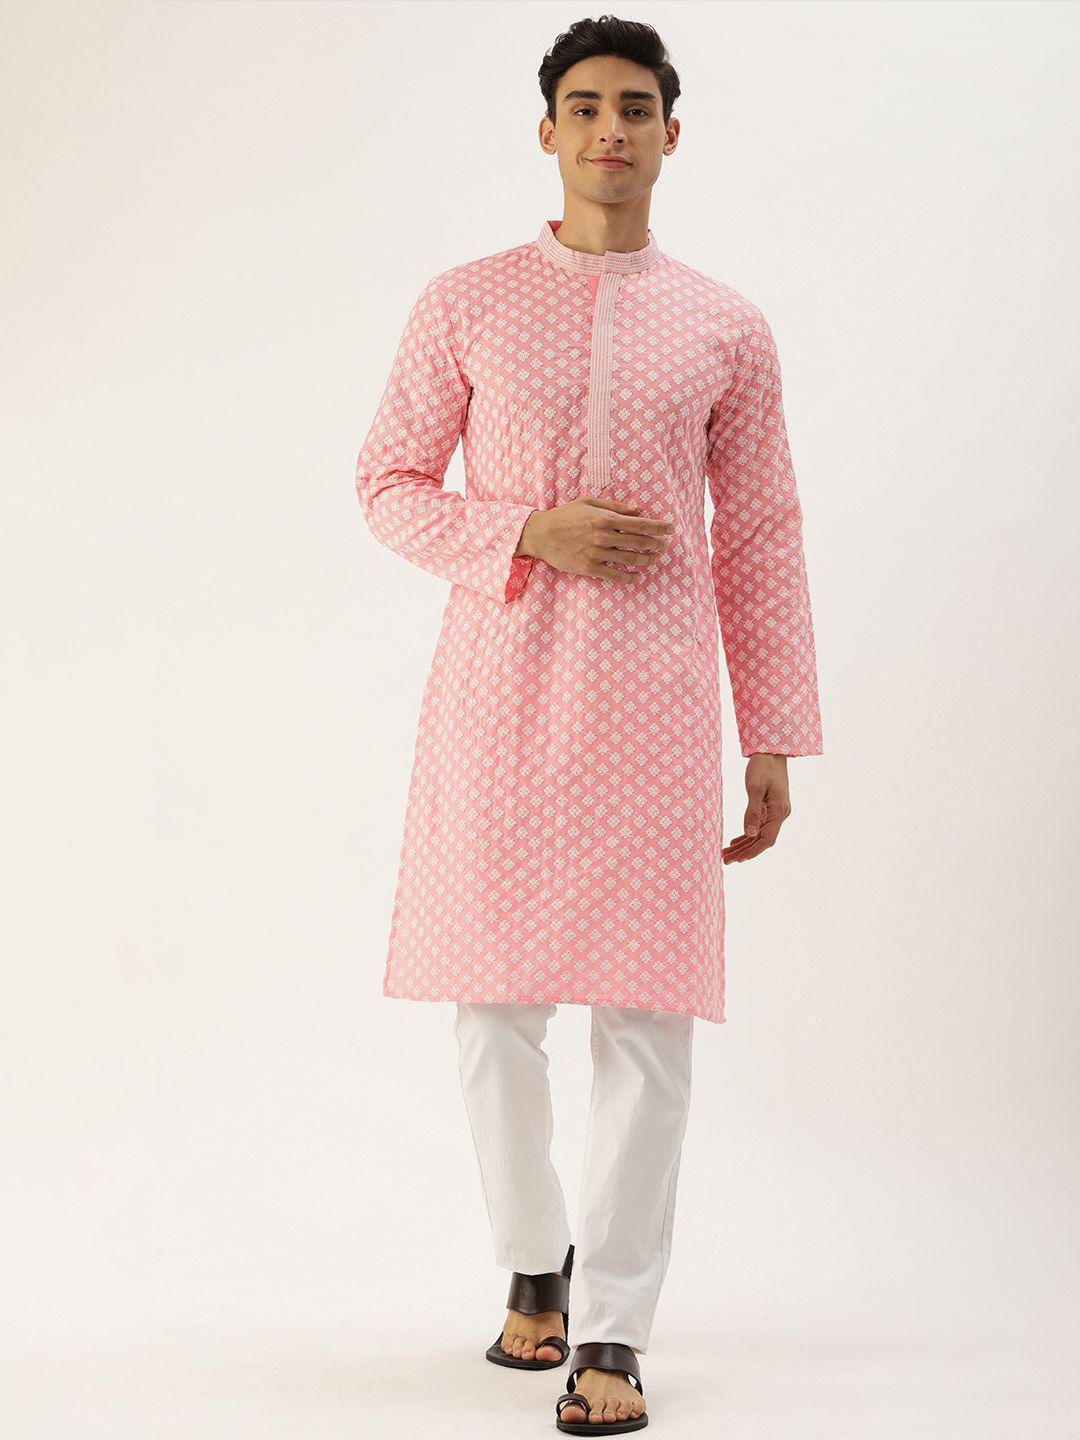 swagg-india-men-pink-&-white-ethnic-motifs-embroidered-chikankari-kurta